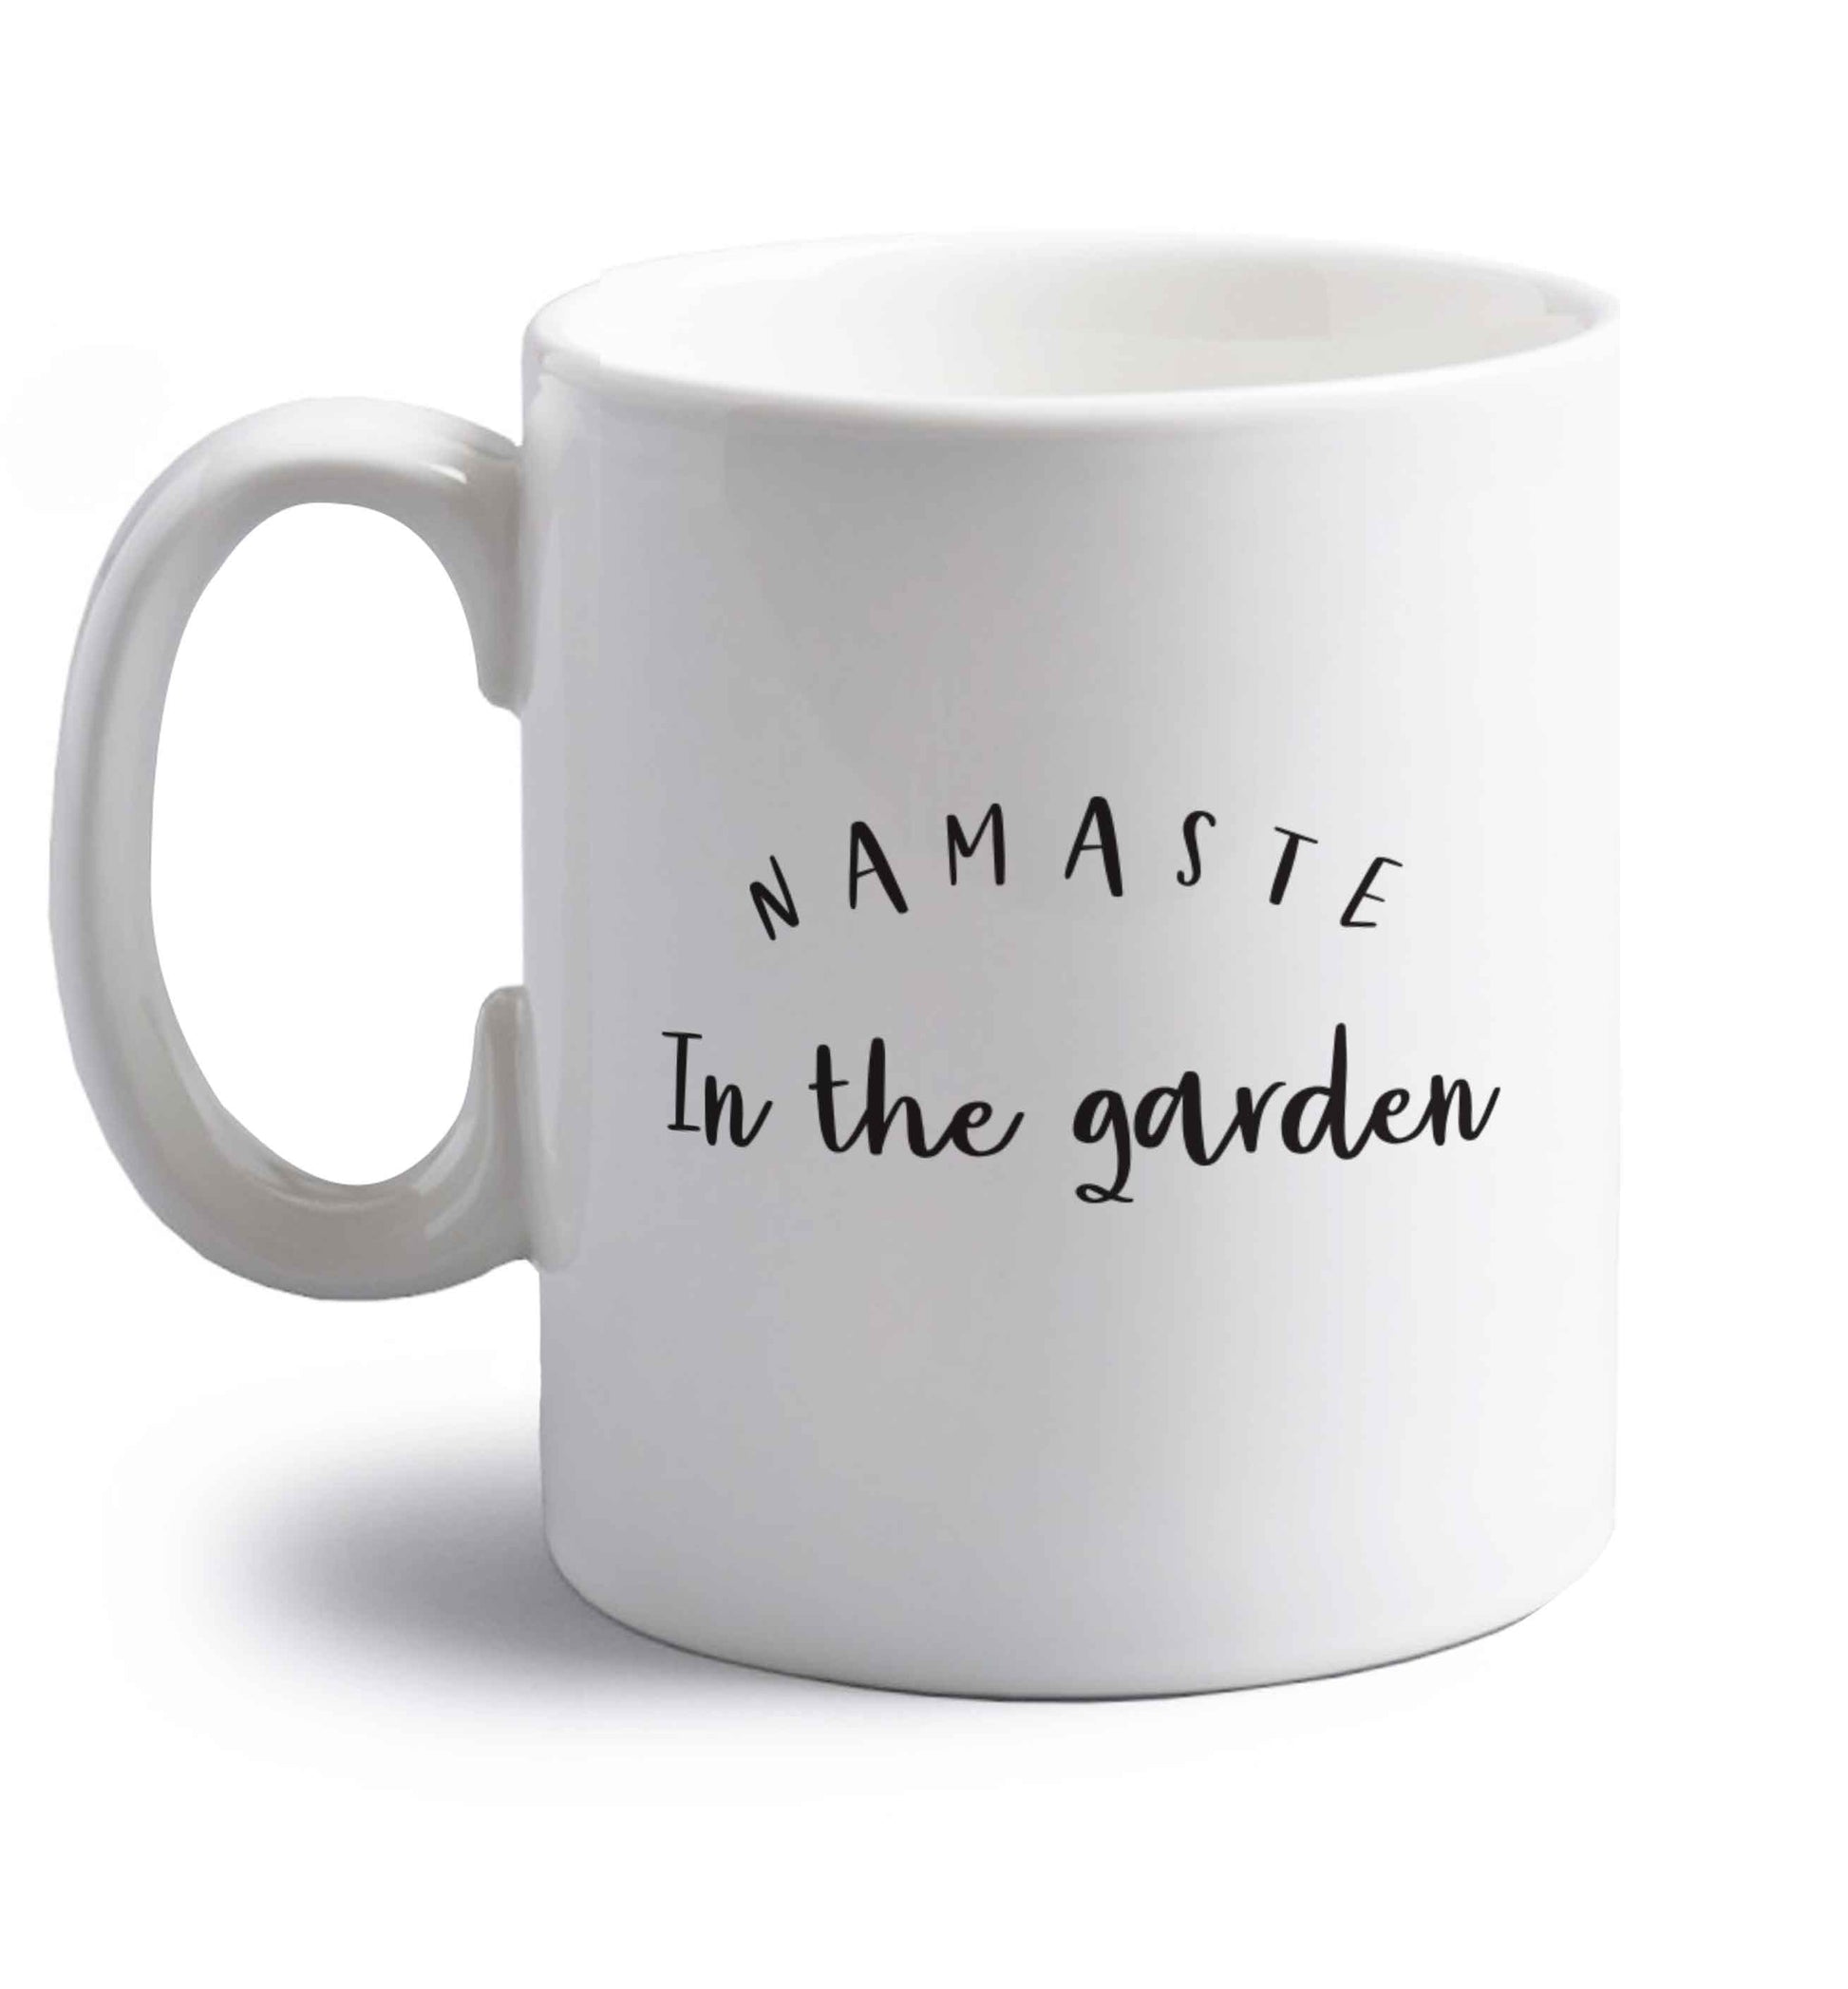 Namaste in the garden right handed white ceramic mug 